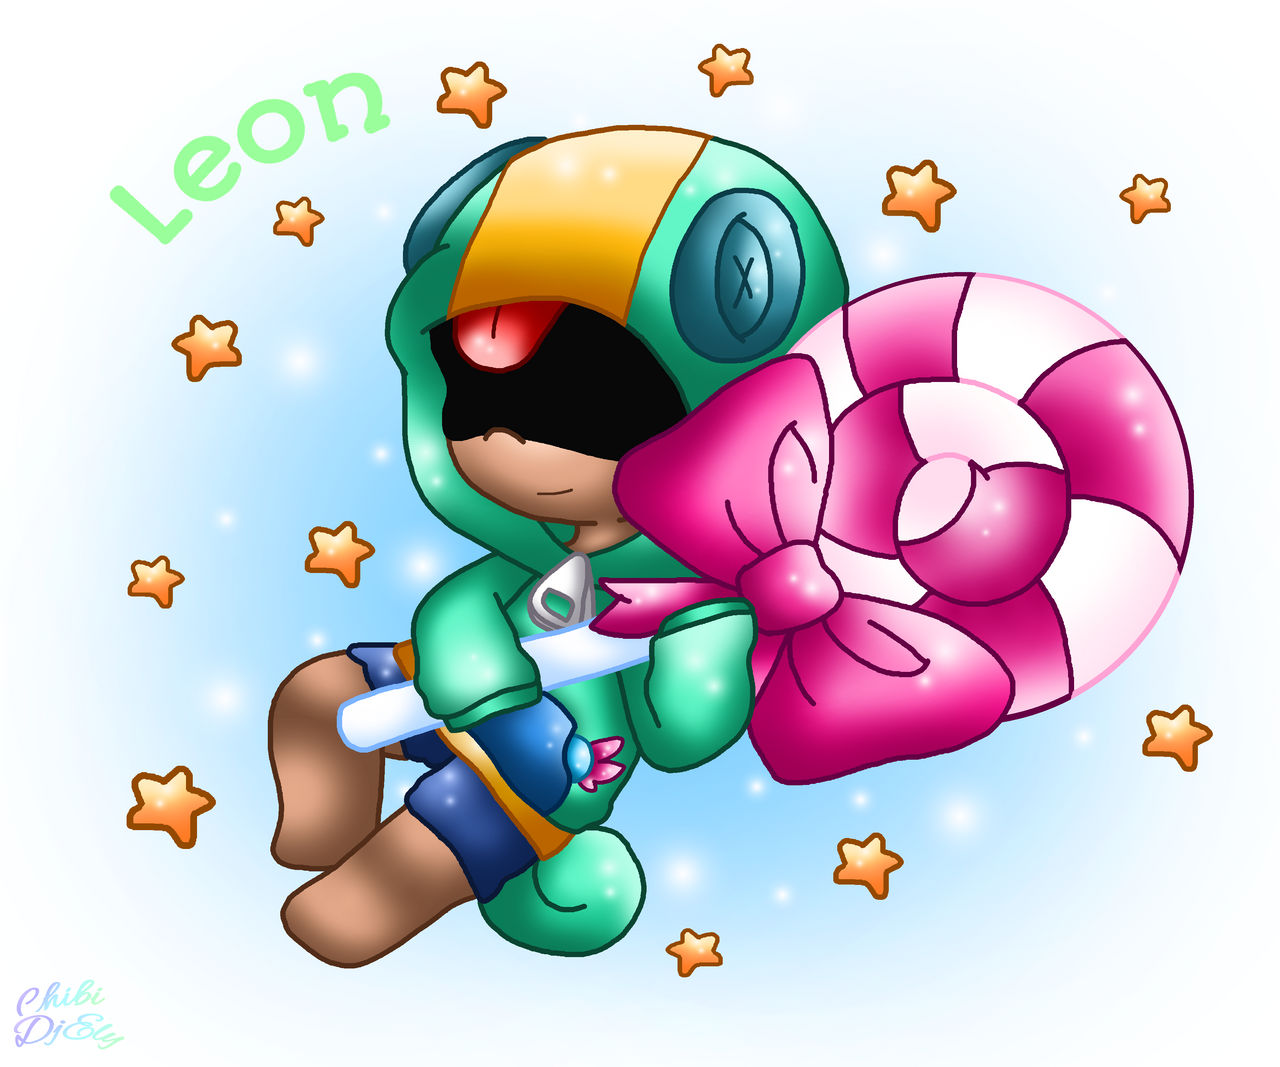 Chibi Leon(Brawl Stars) by ChibiDjEly on DeviantArt